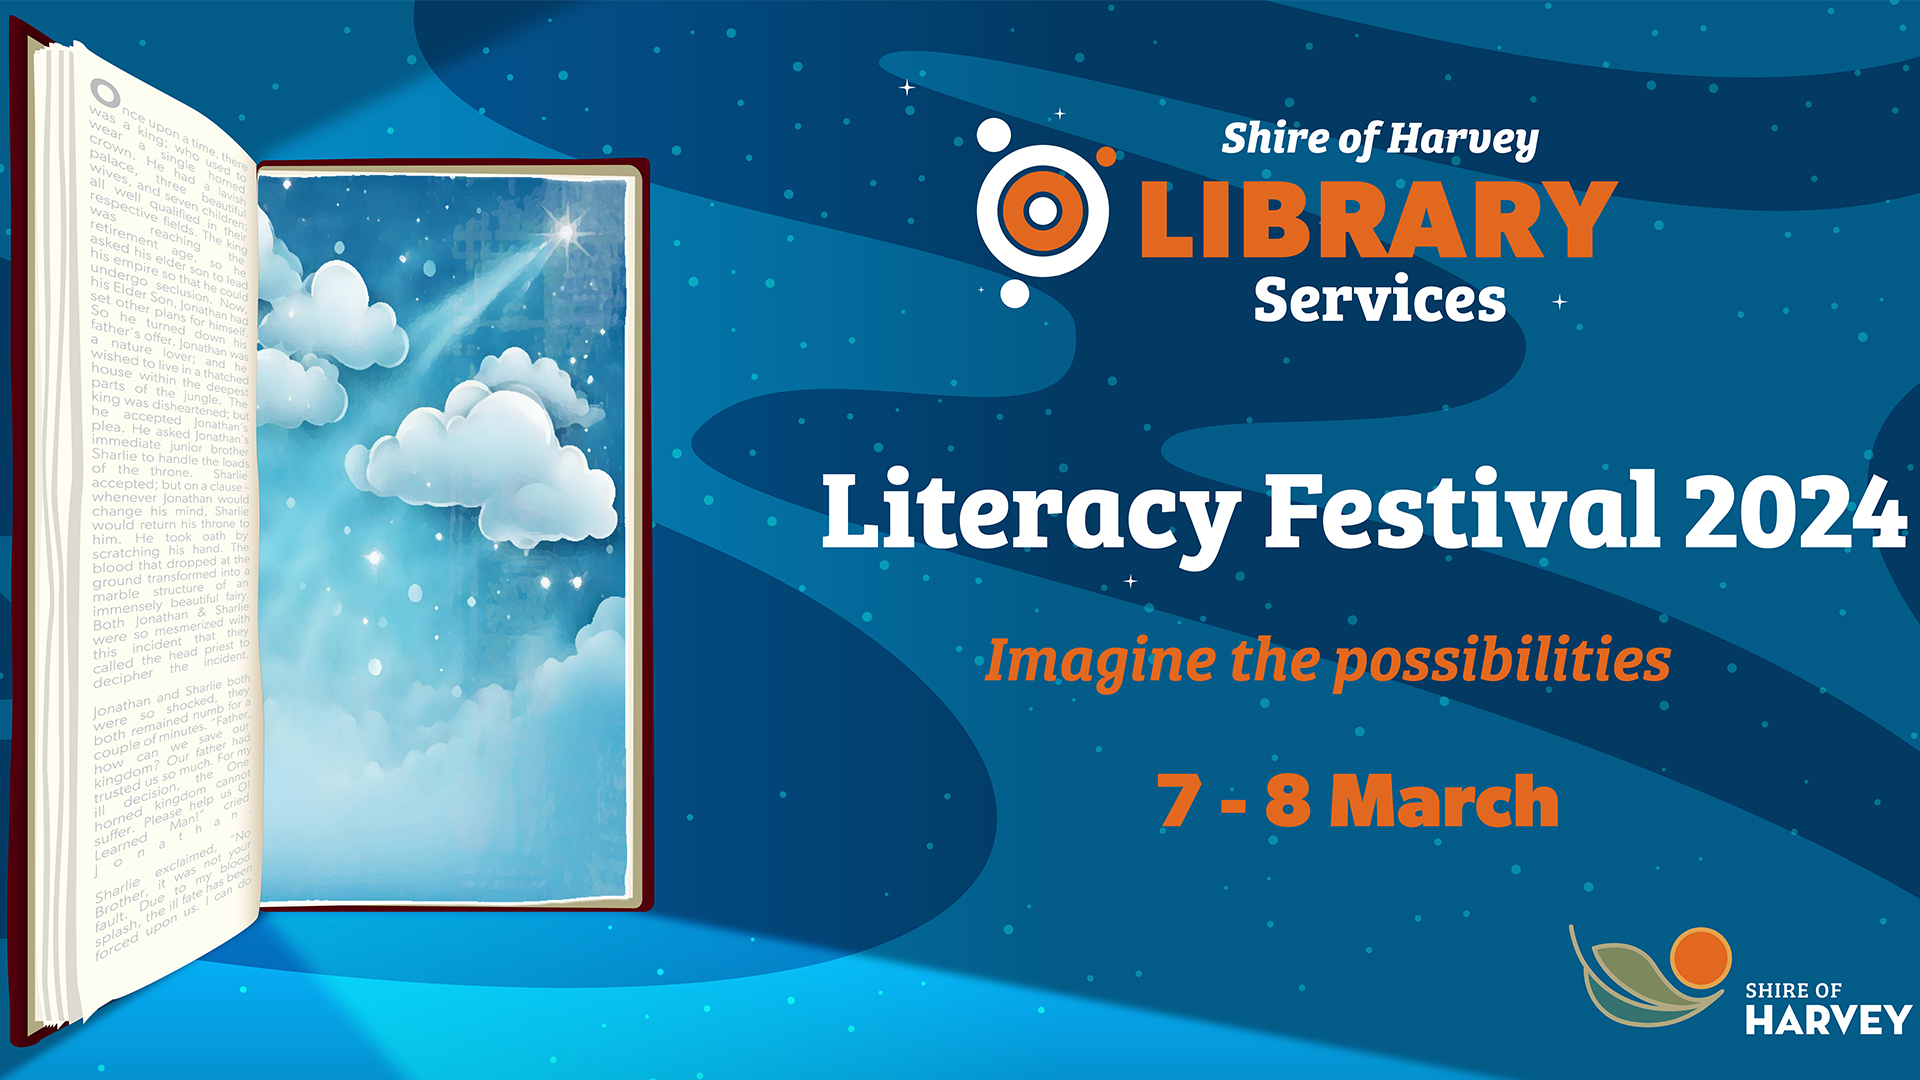 Literacy Festival 2024